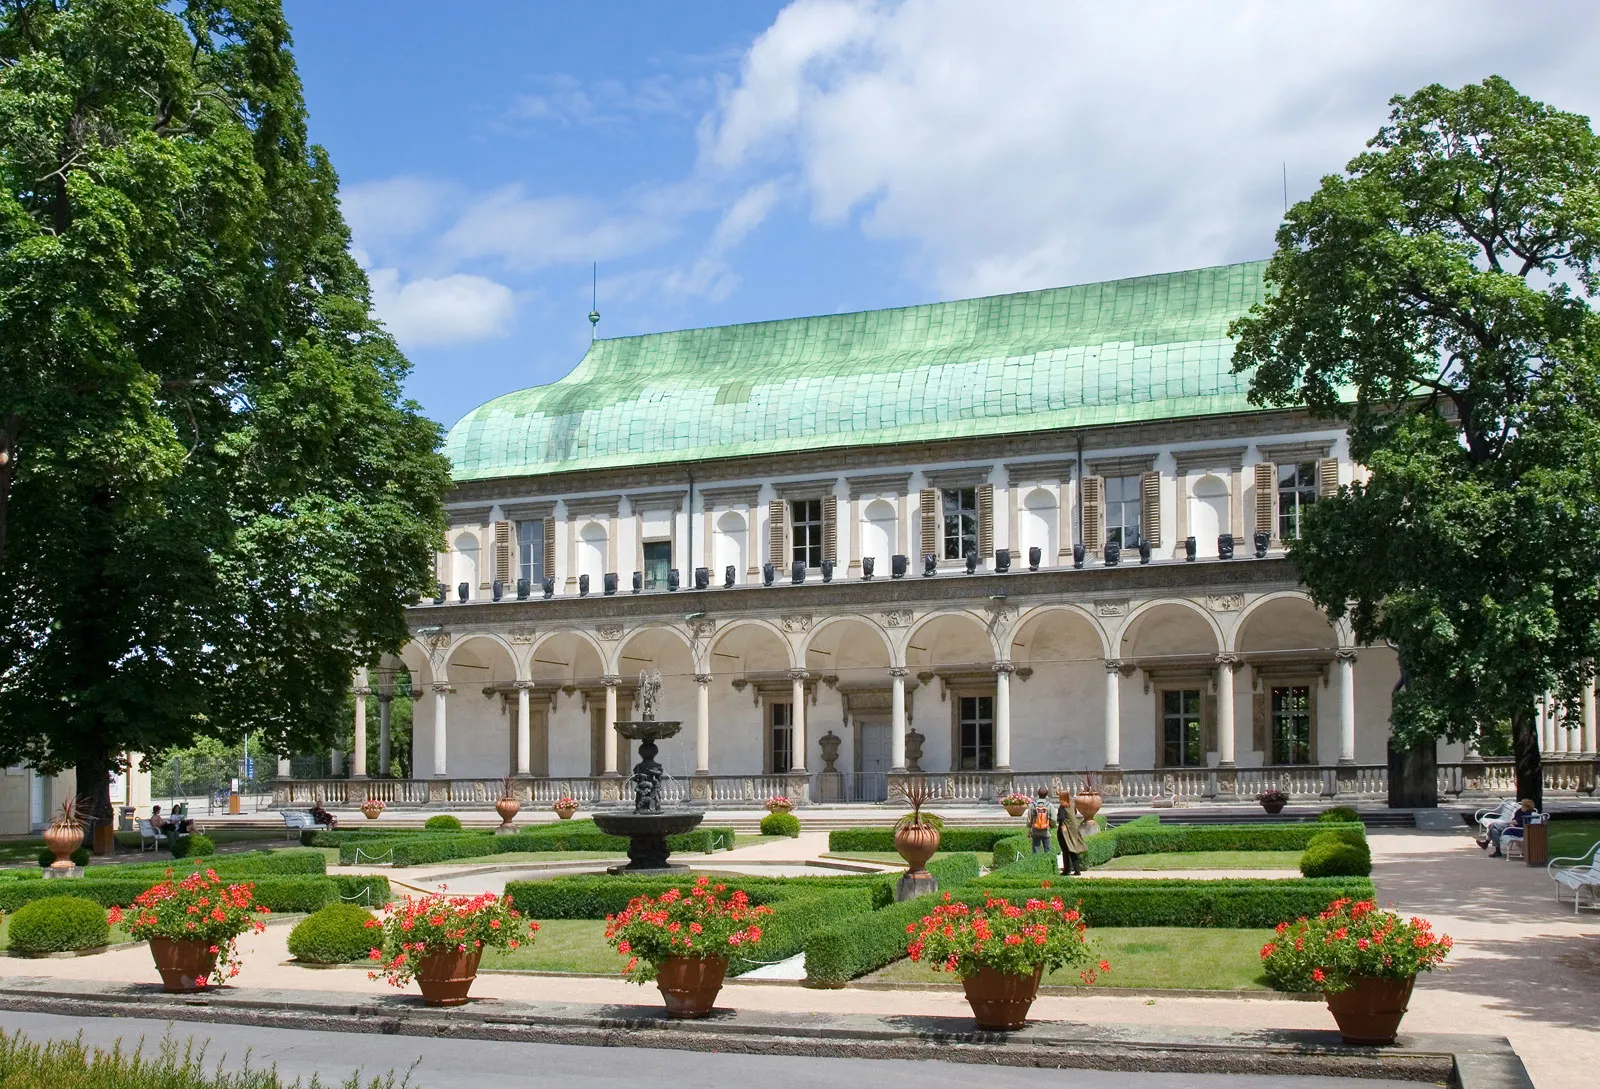 The Royal Summer Palace's Western Facade